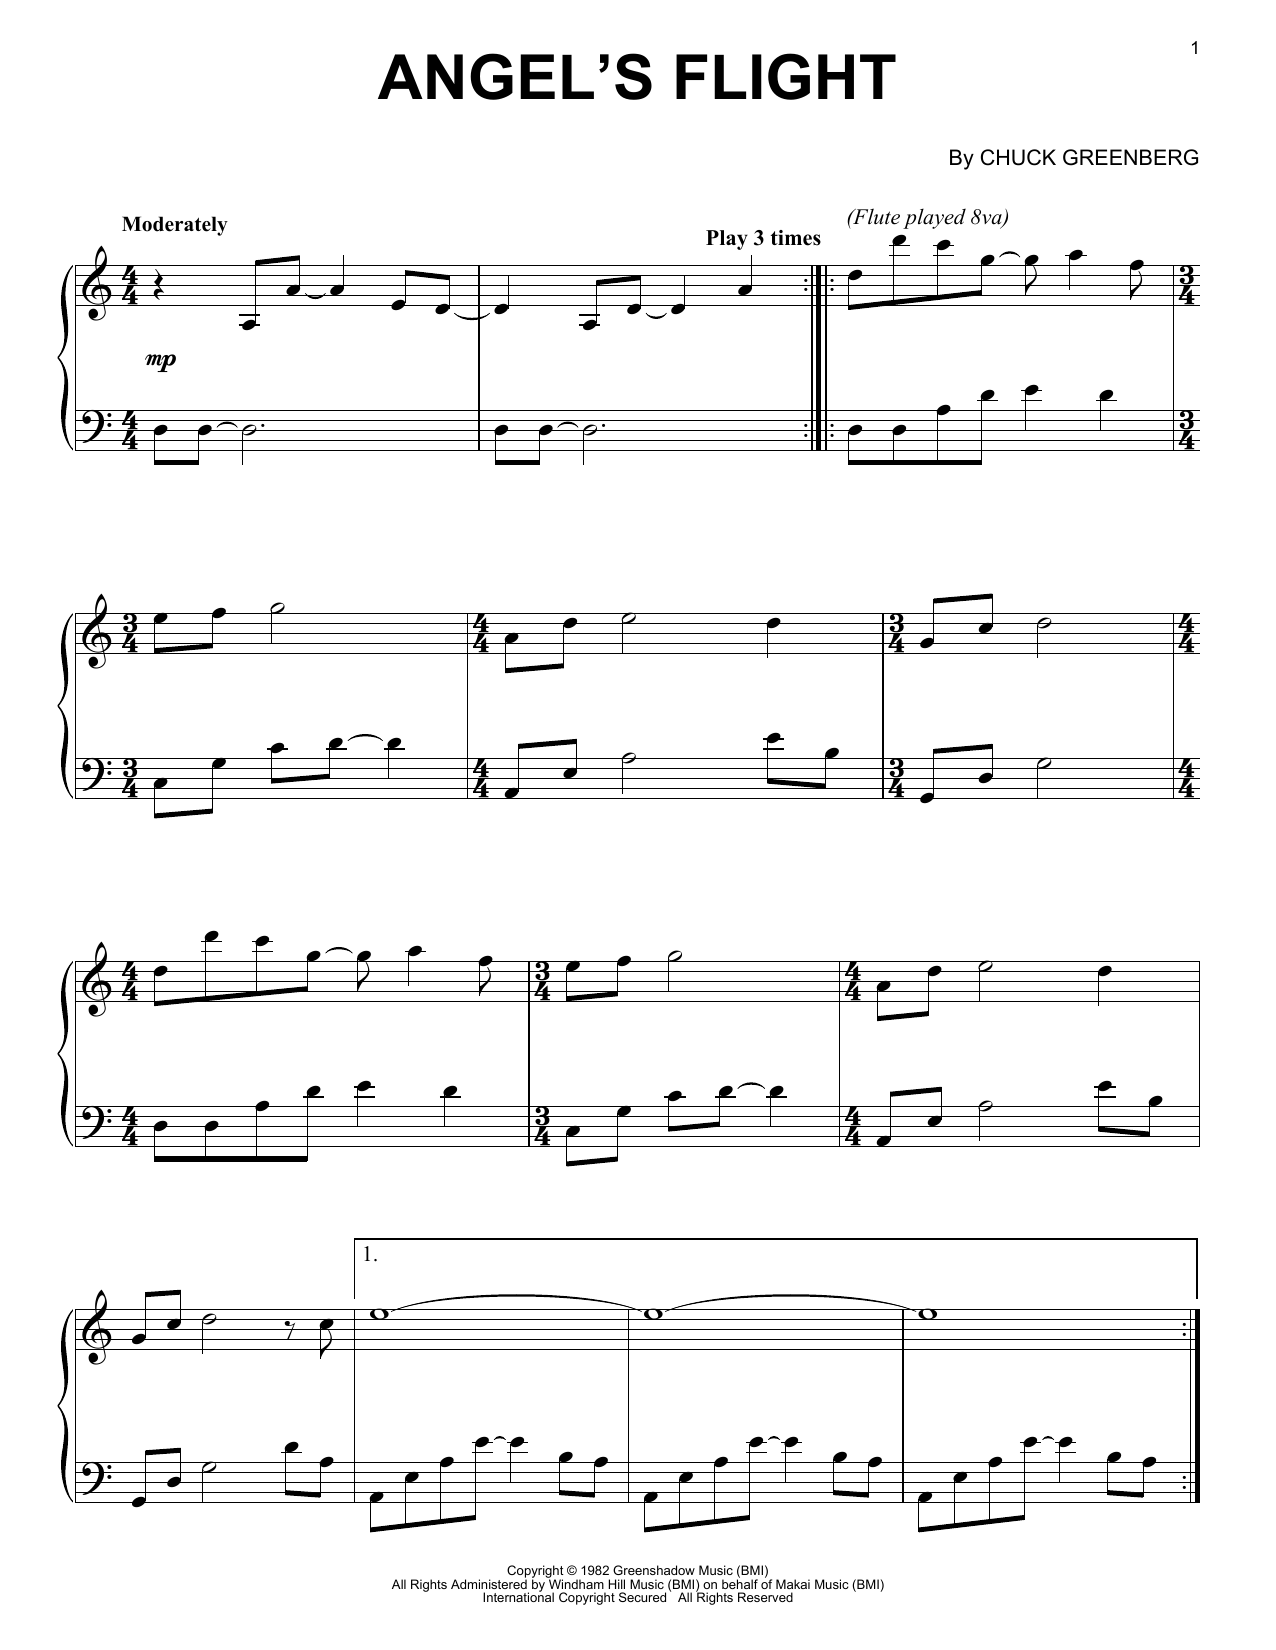 Shadowfax Angel's Flight Sheet Music Notes & Chords for Piano - Download or Print PDF